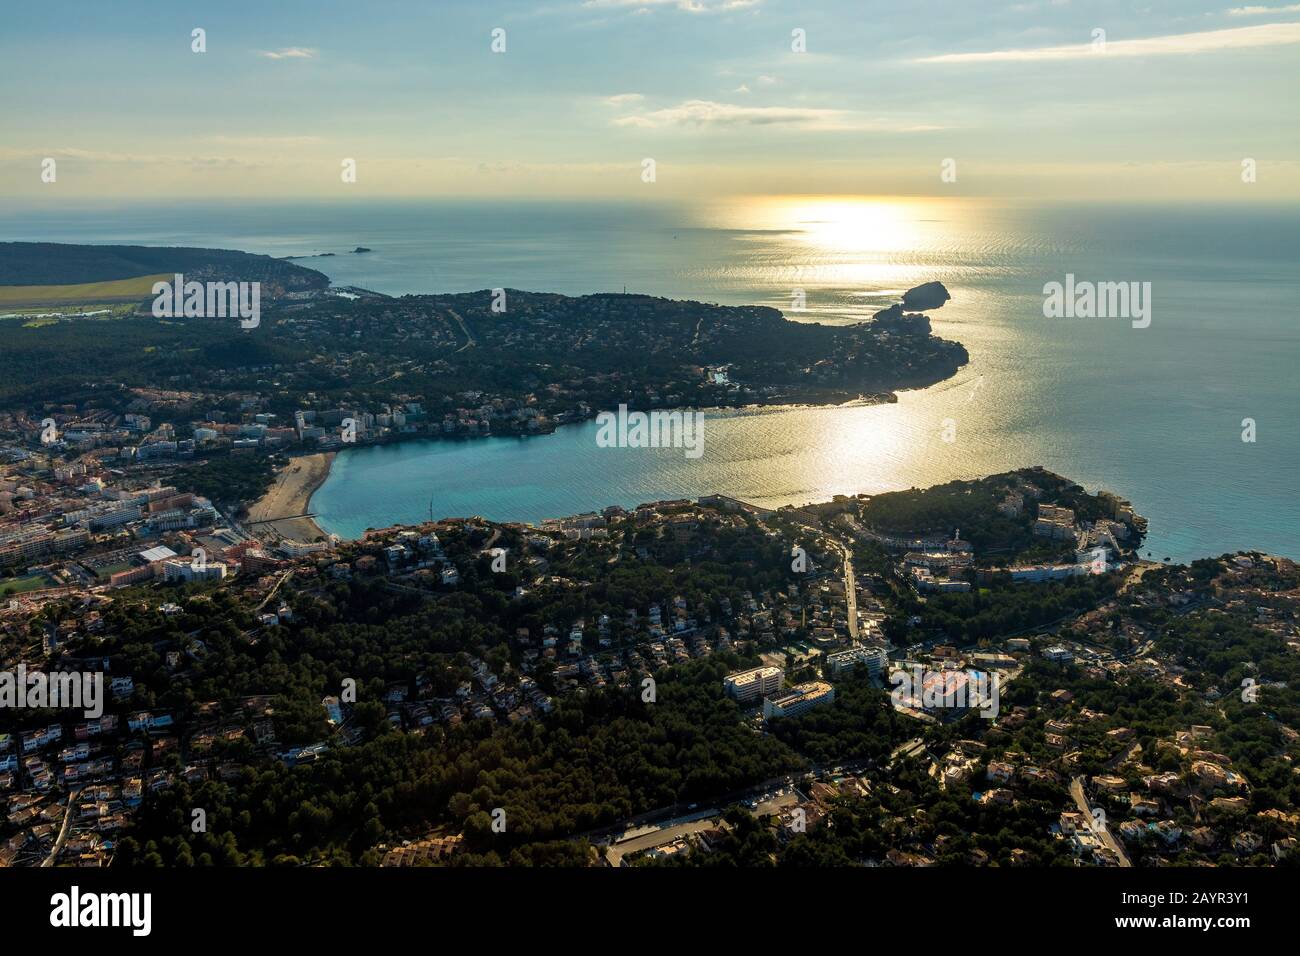 playa Santa Ponsa in backlight, 04.01.2020, aerial view, Spain, Balearic Islands, Majorca, Calvia Stock Photo